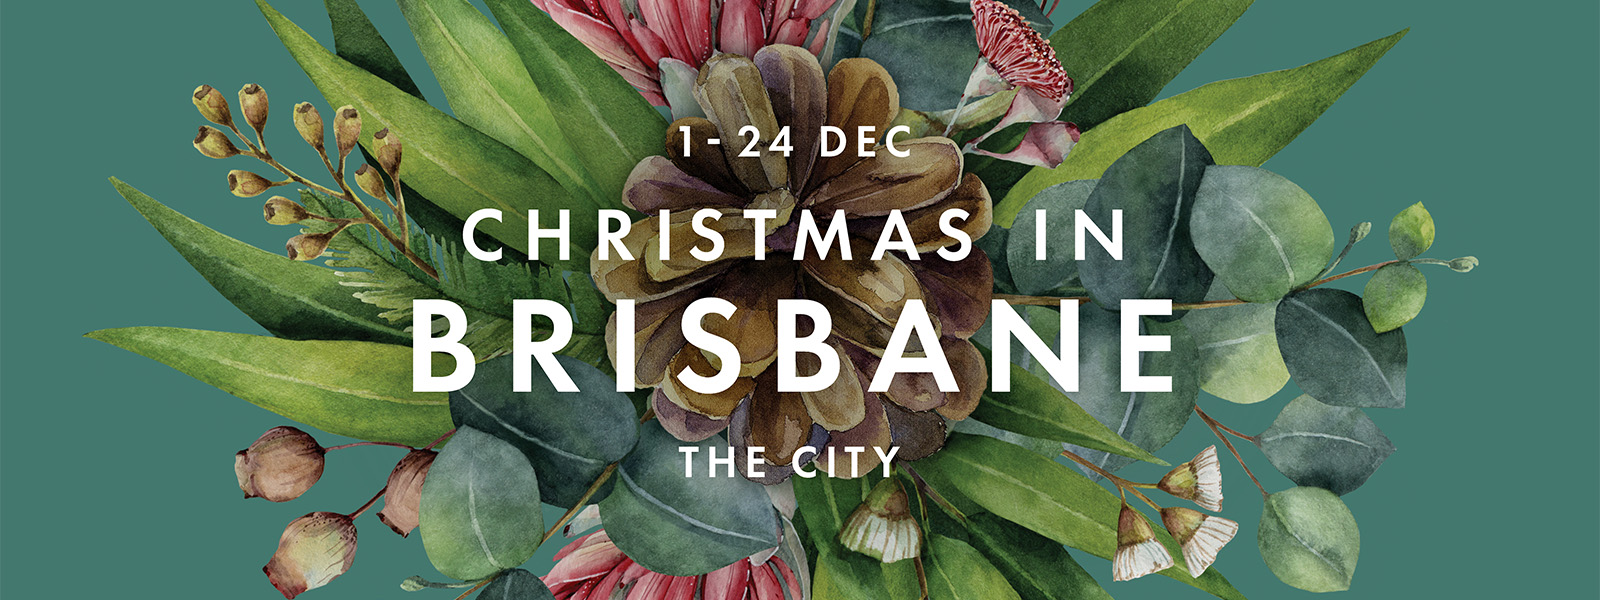 Christmas in Brisbane 1-24 December